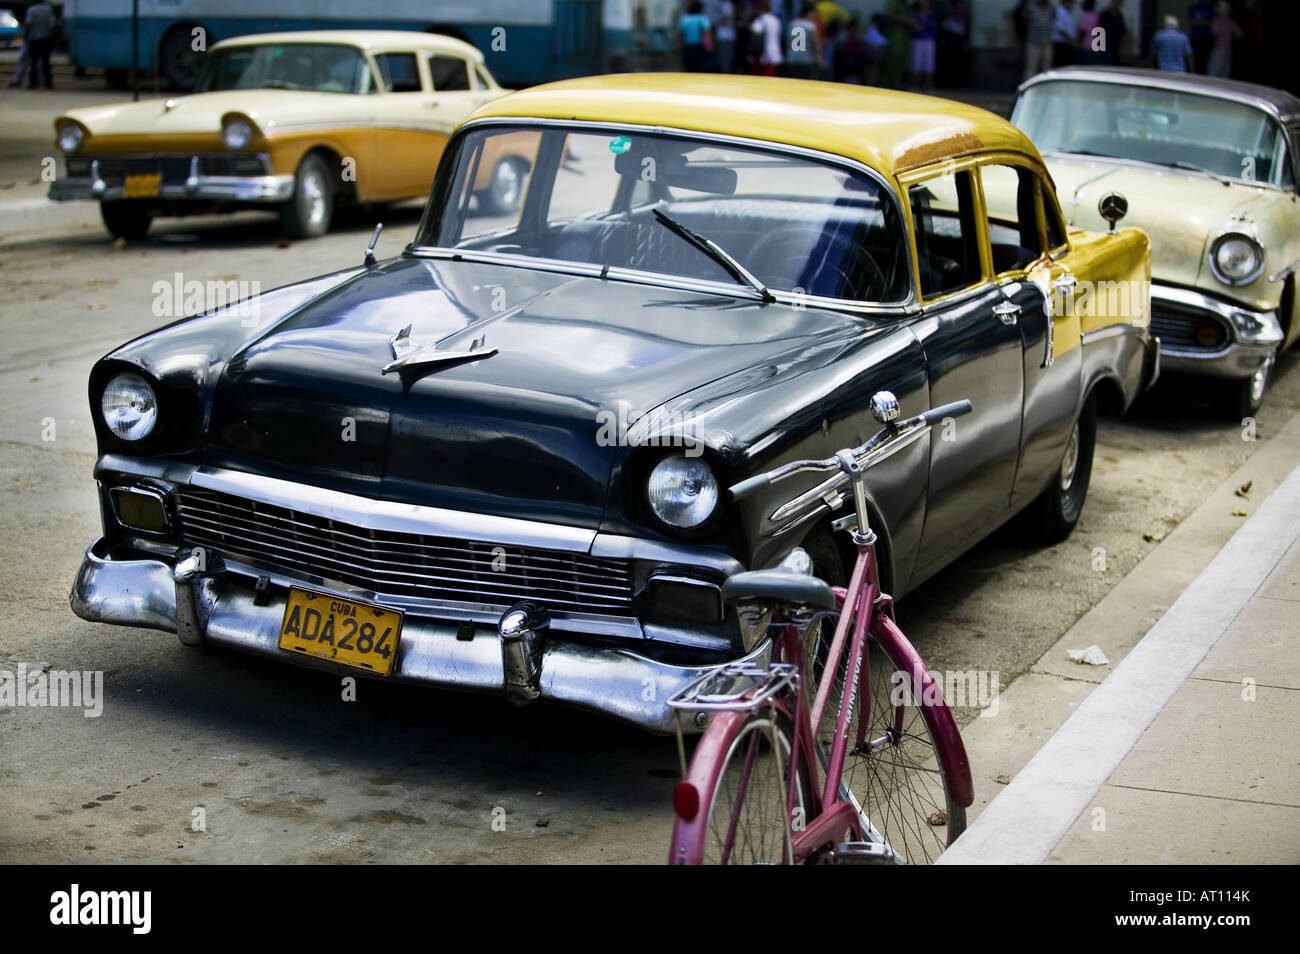 Alte amerikanische Chevy (Chevrolet) sitzt in Moran (Kuba) geparkt. Amerikanische Oldtimer sind in Kuba gesehen. Stockfoto